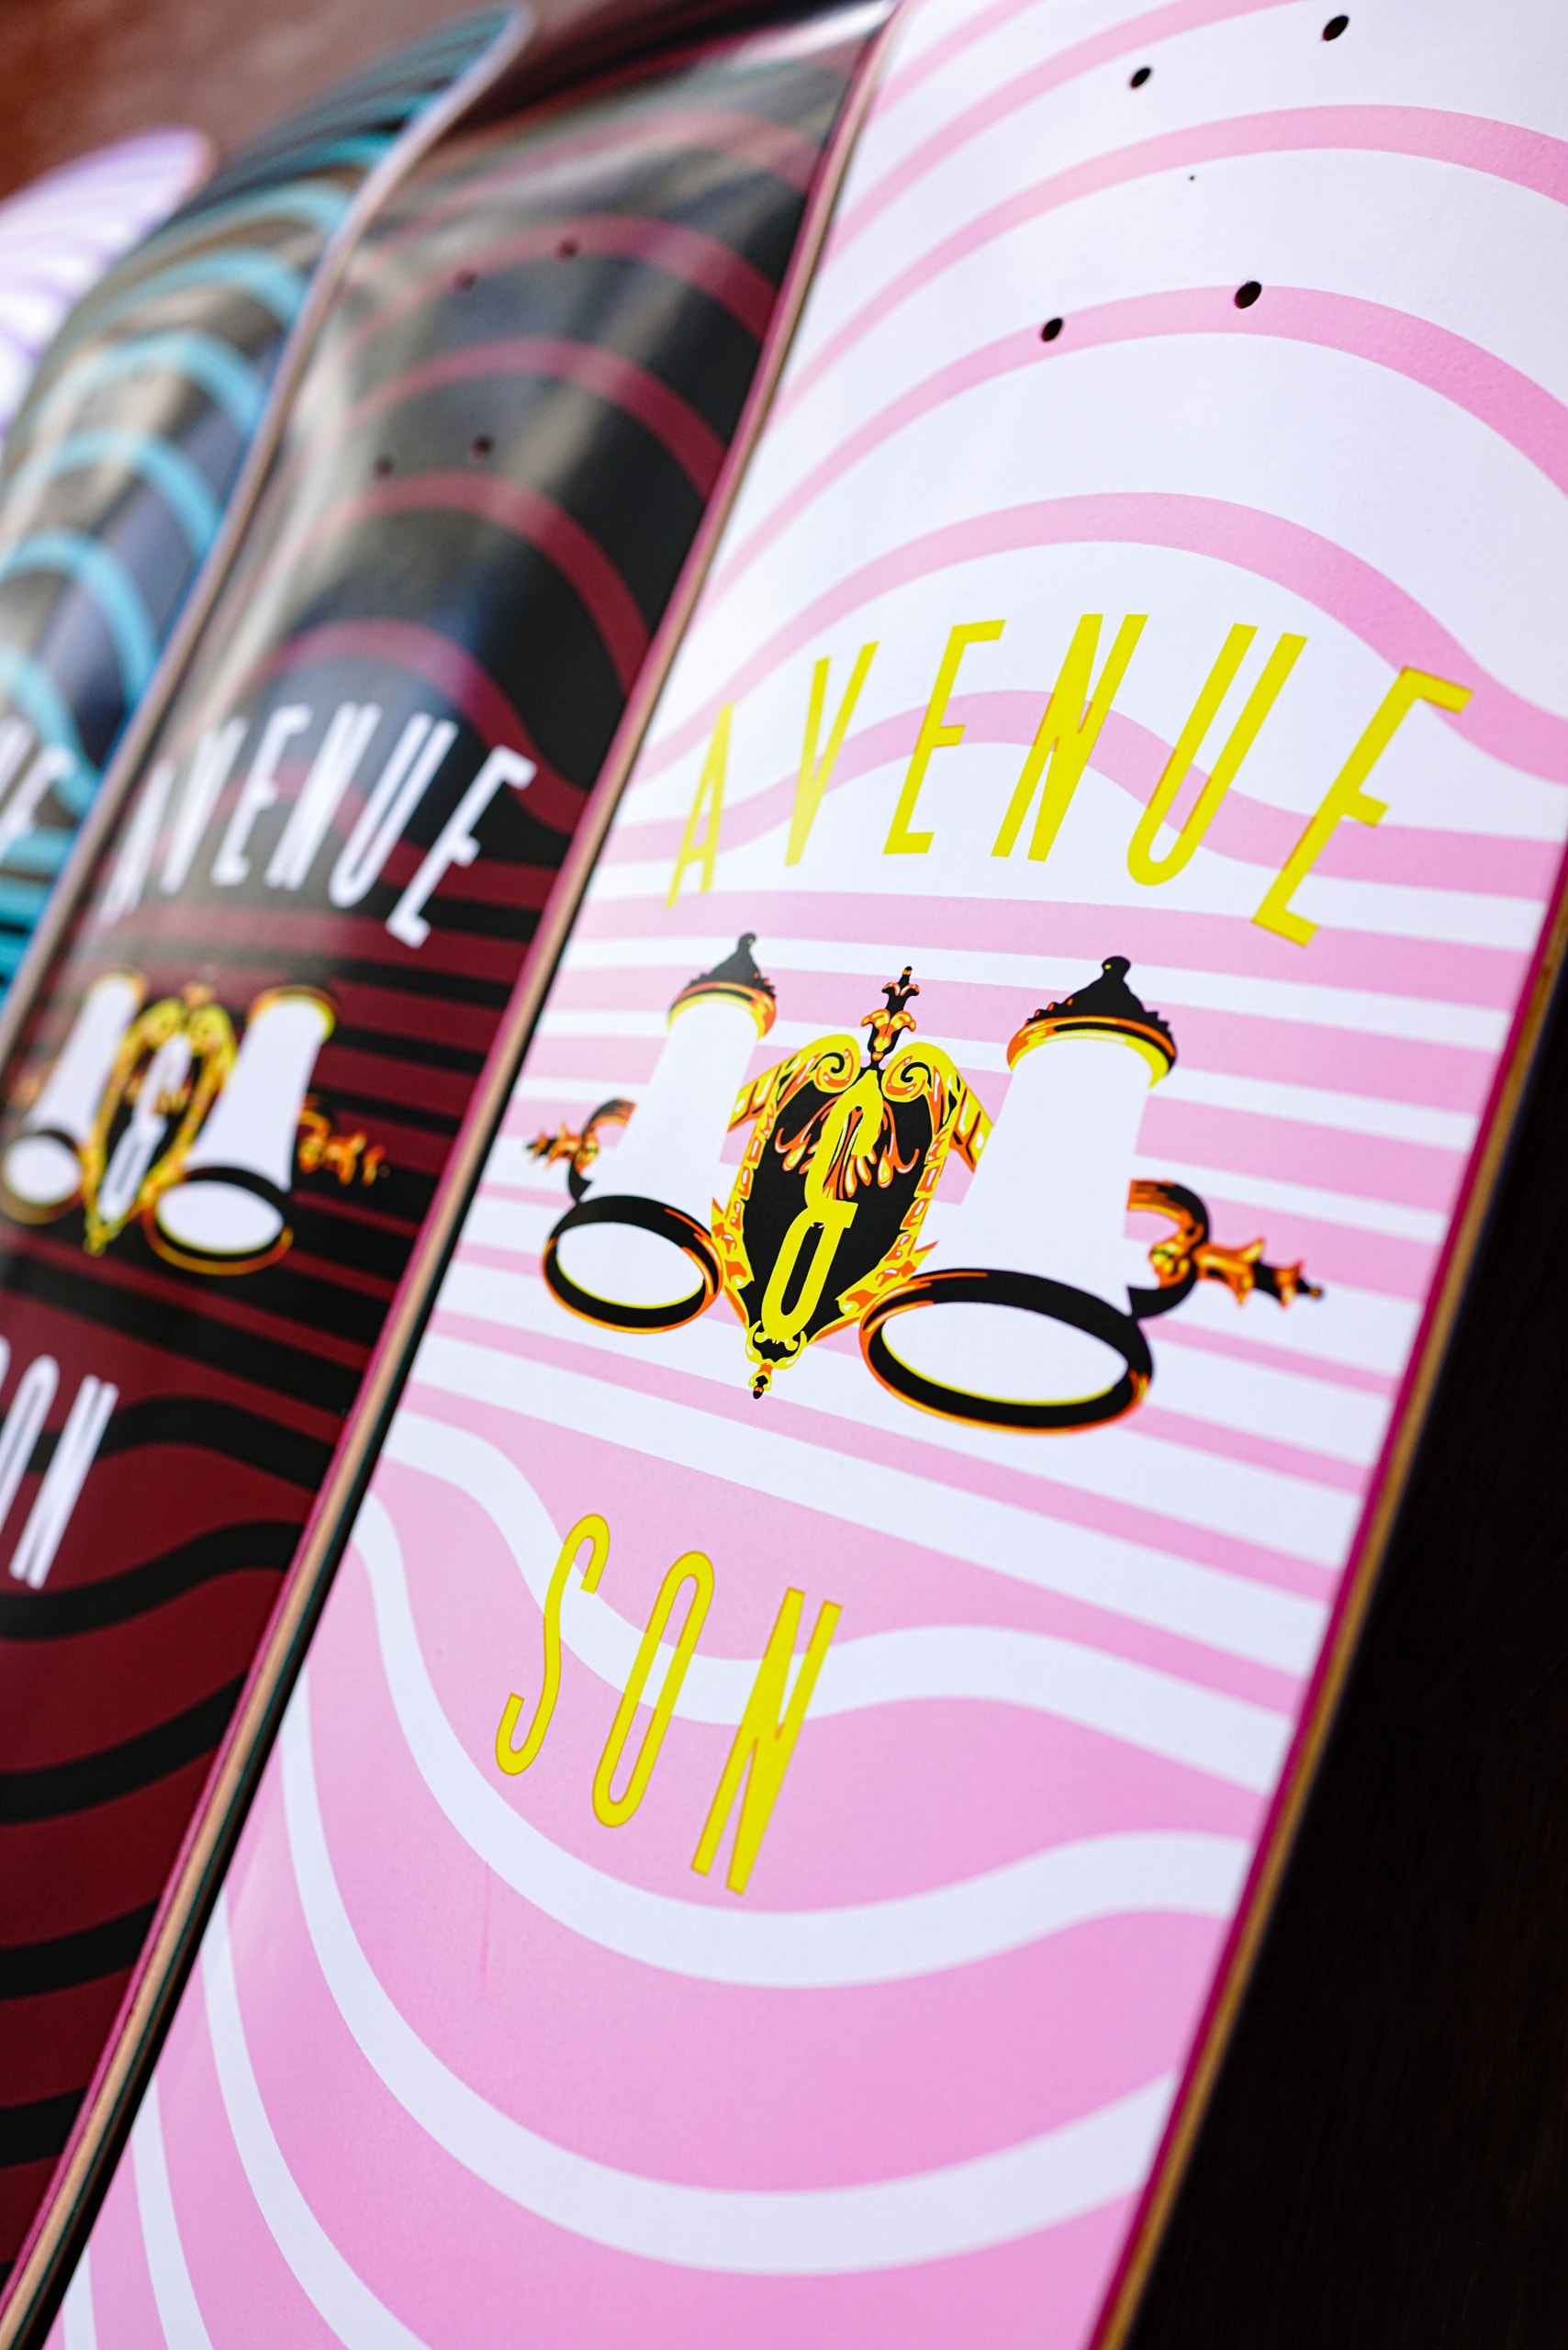 Avenue & Son 2020 秋冬滑板板身系列正式發佈 